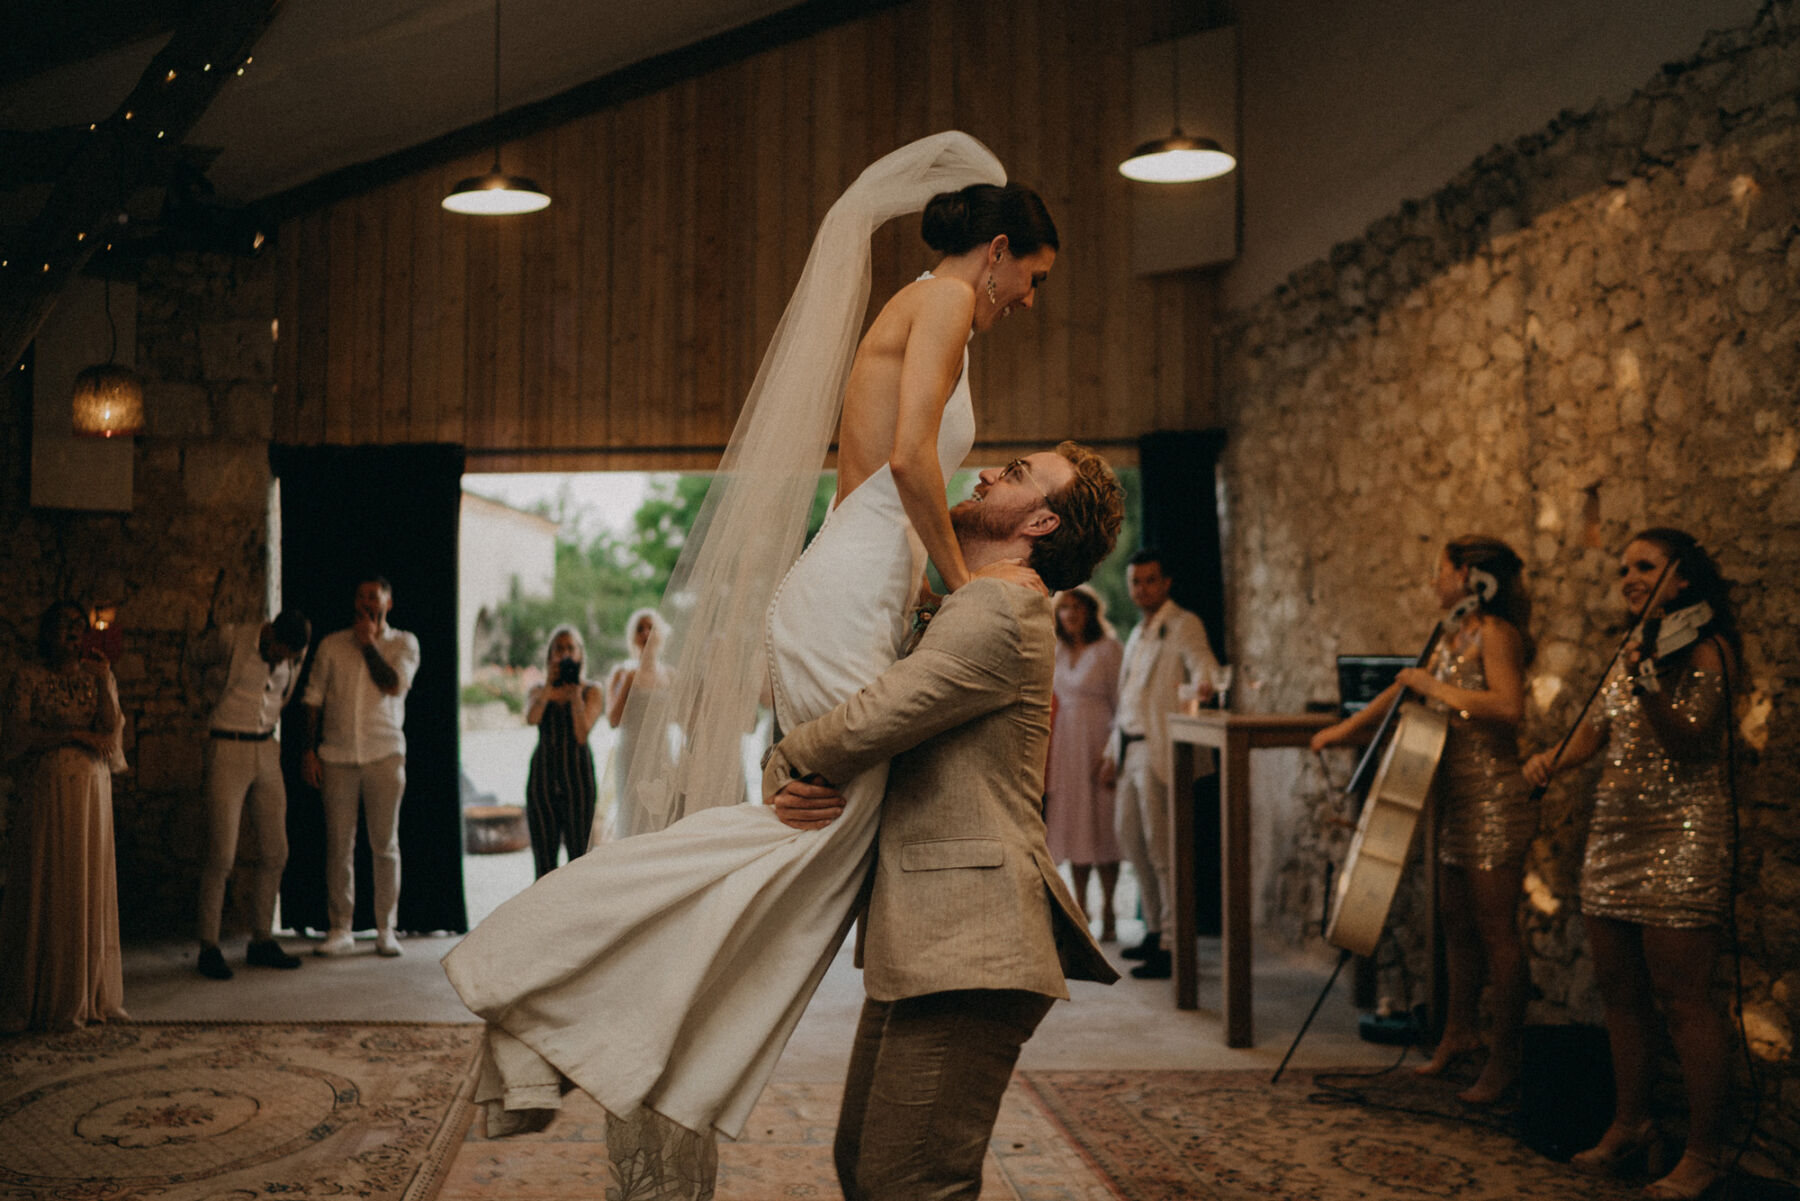 Groom lifting his bride in a halterneck wedding dress on the dancefloor.